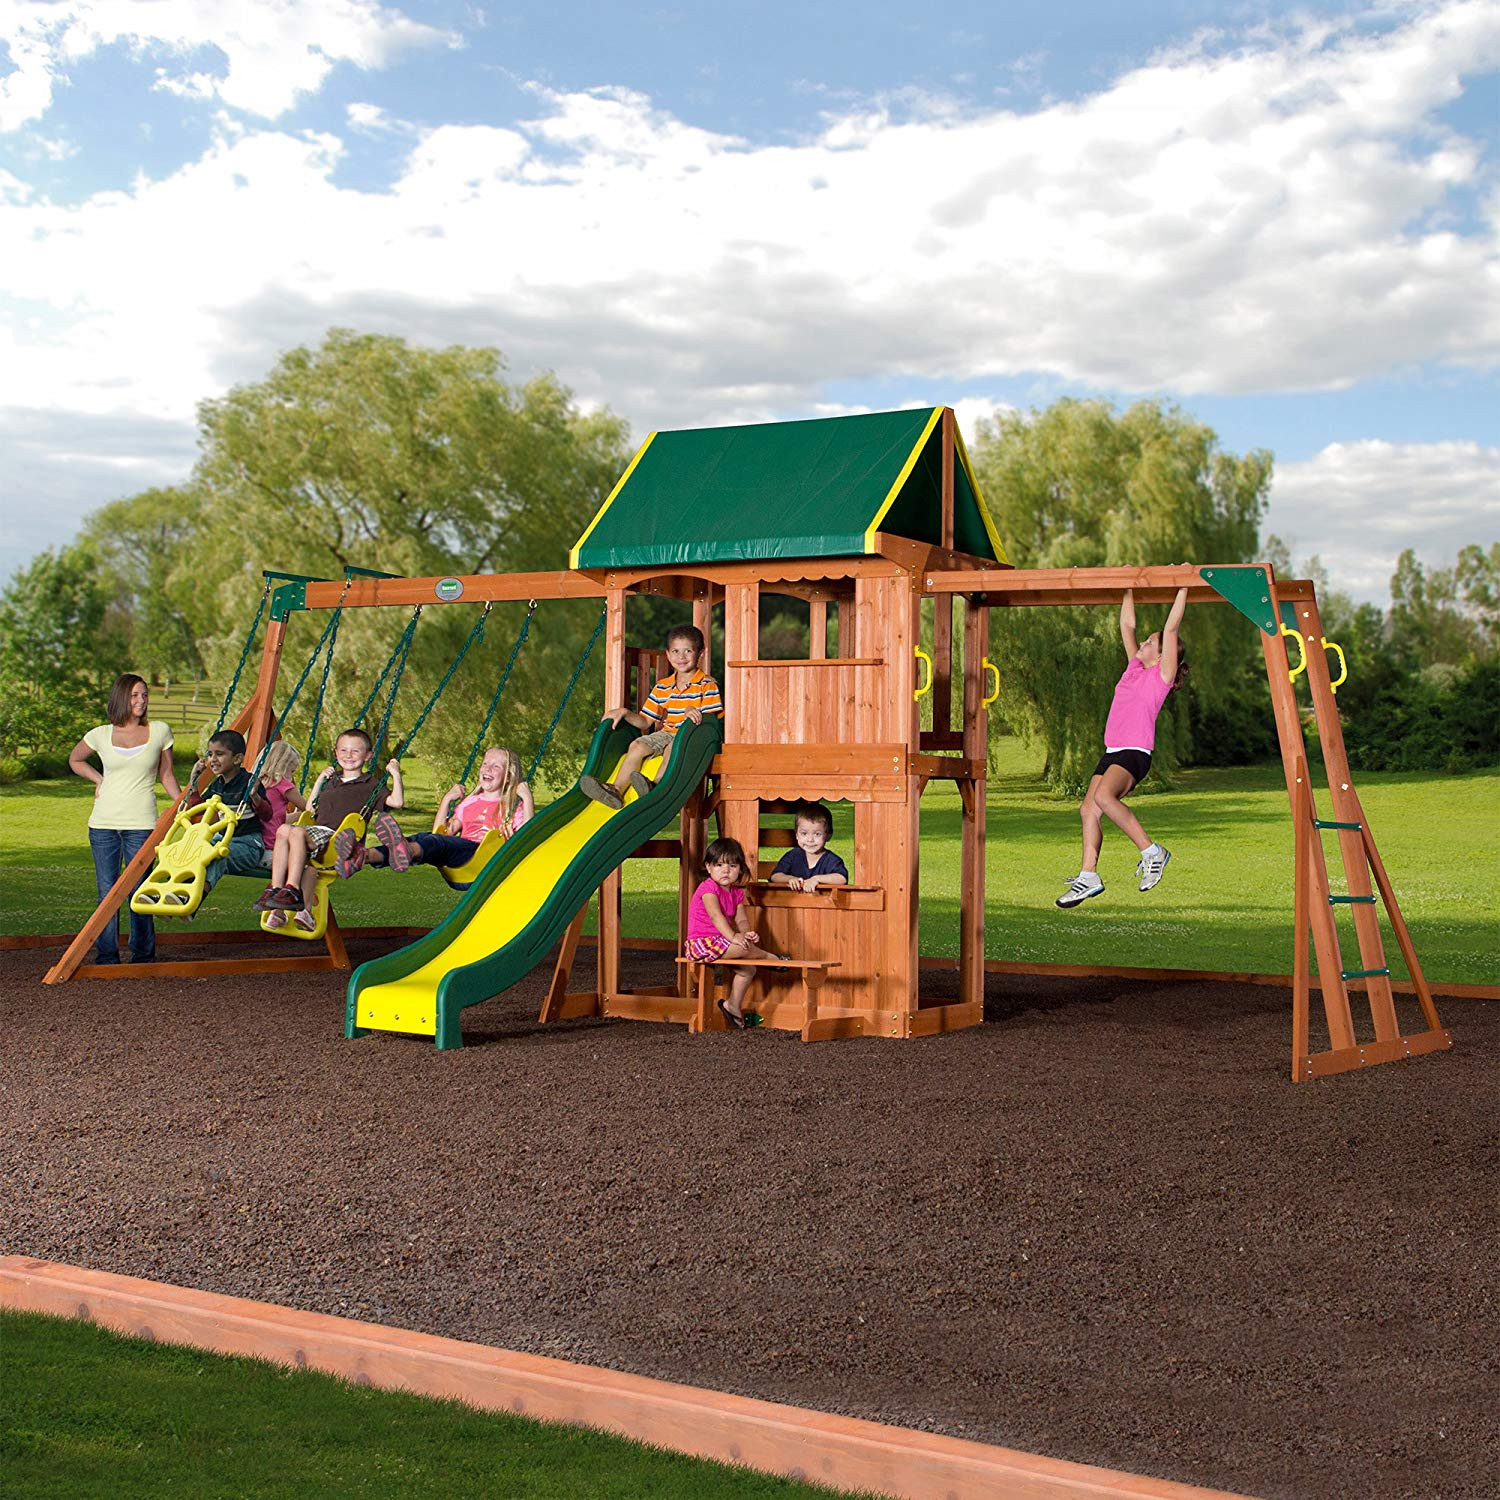 Swing Set Kids
 Outdoor Cedar Wooden Swing Set Kids Play Center Slide